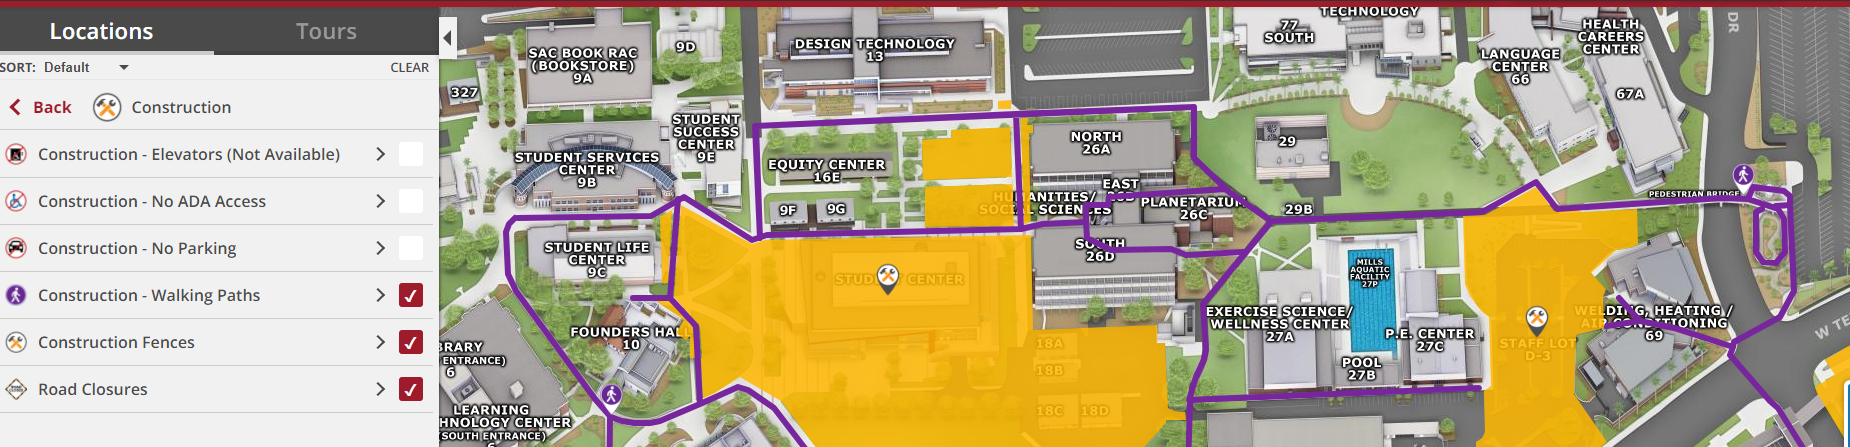 walking paths on campus map